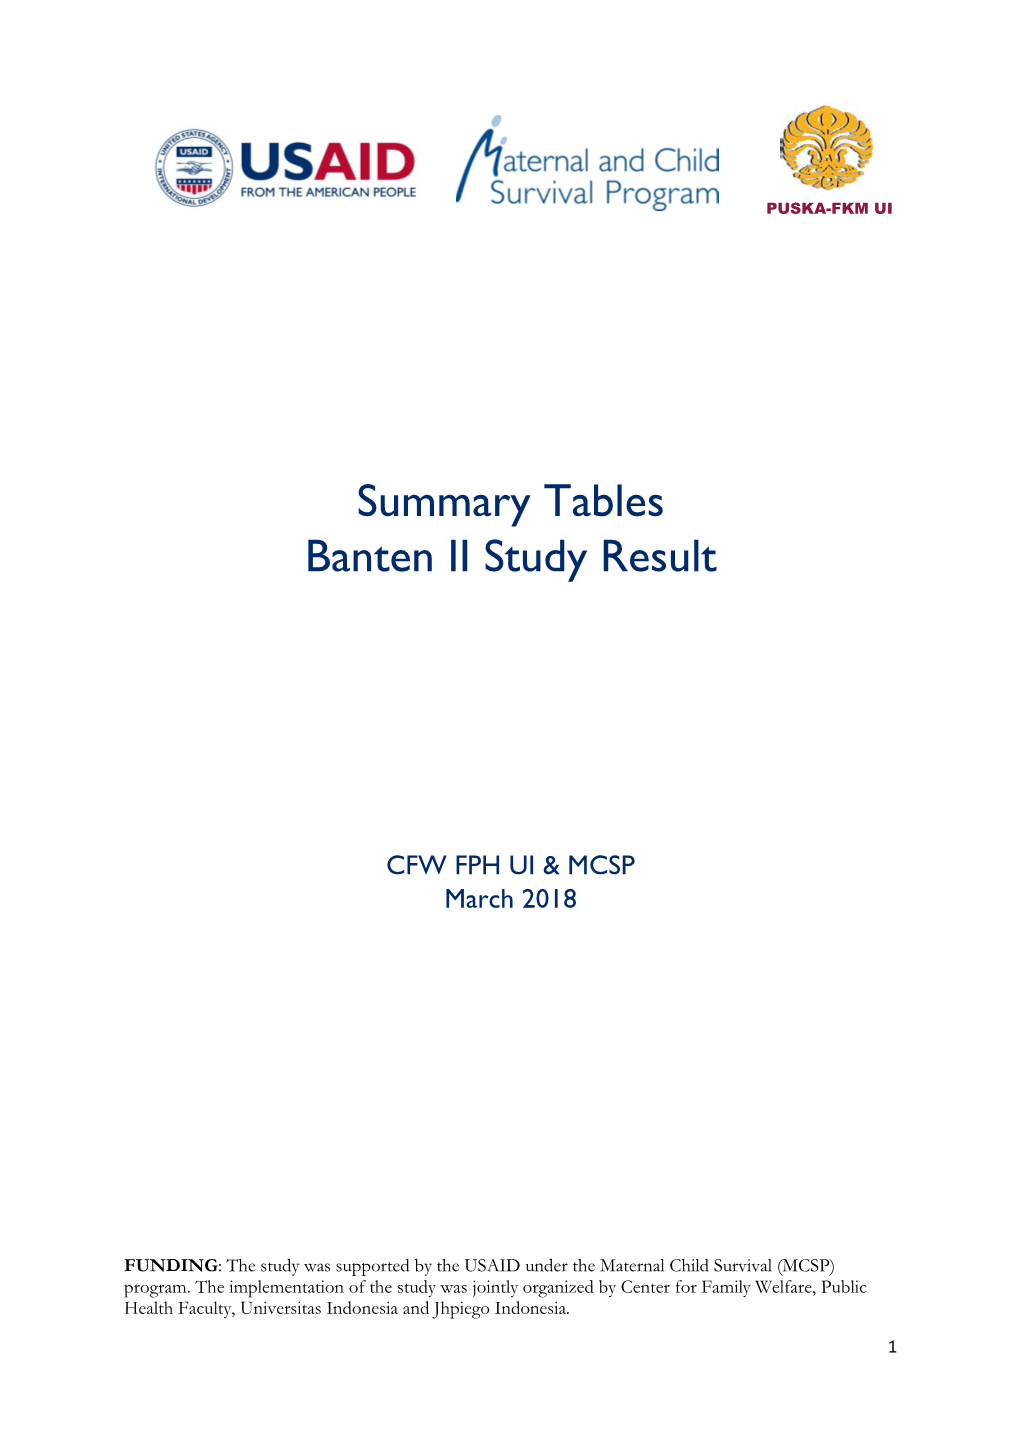 Summary Tables Banten II Study Result